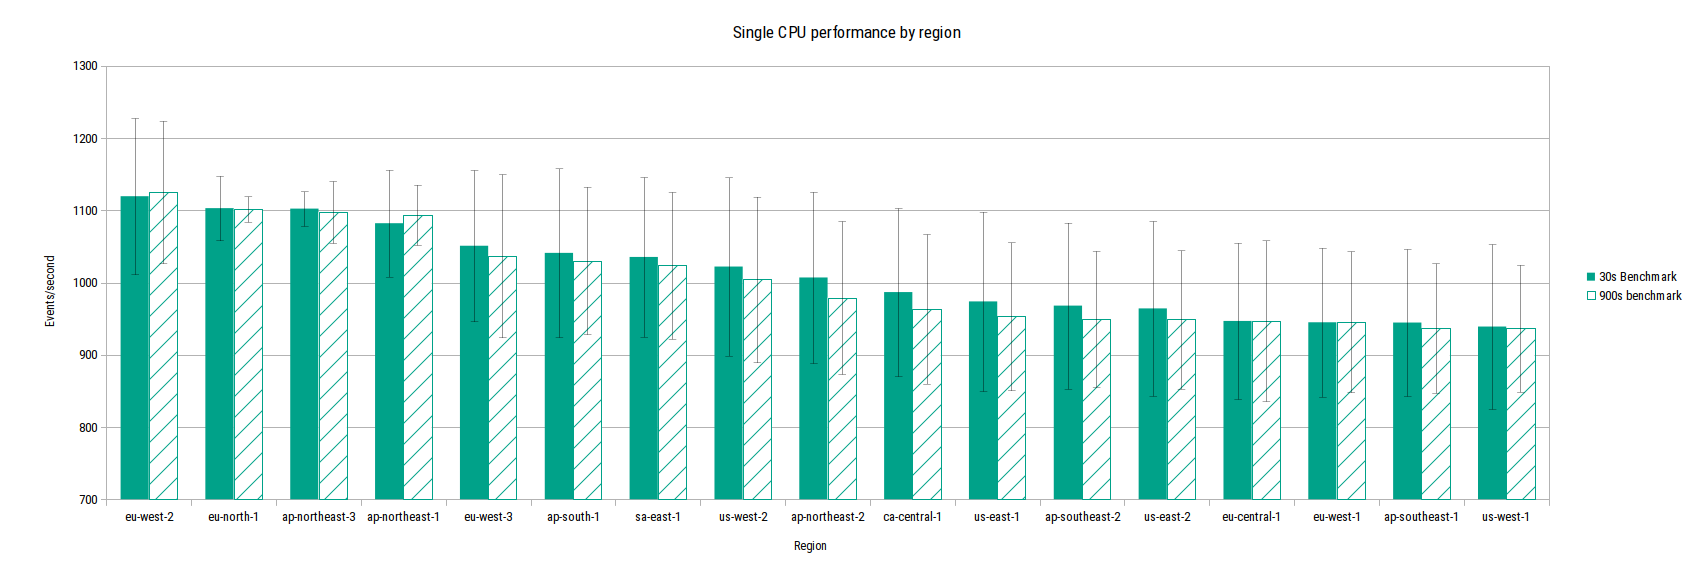 Single CPU performance by region